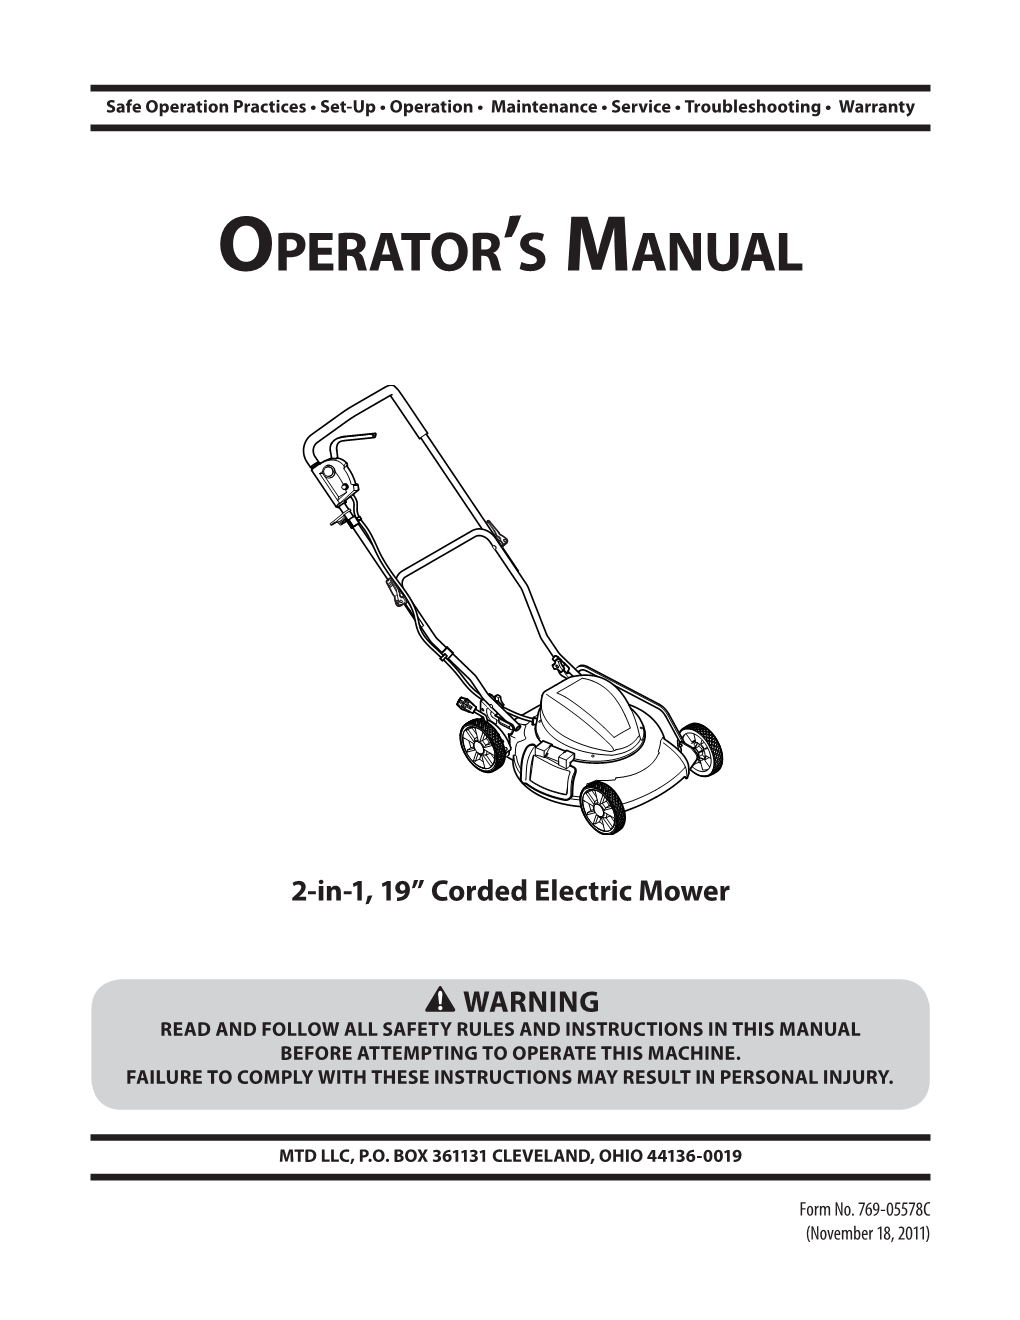 Operatorts Manual